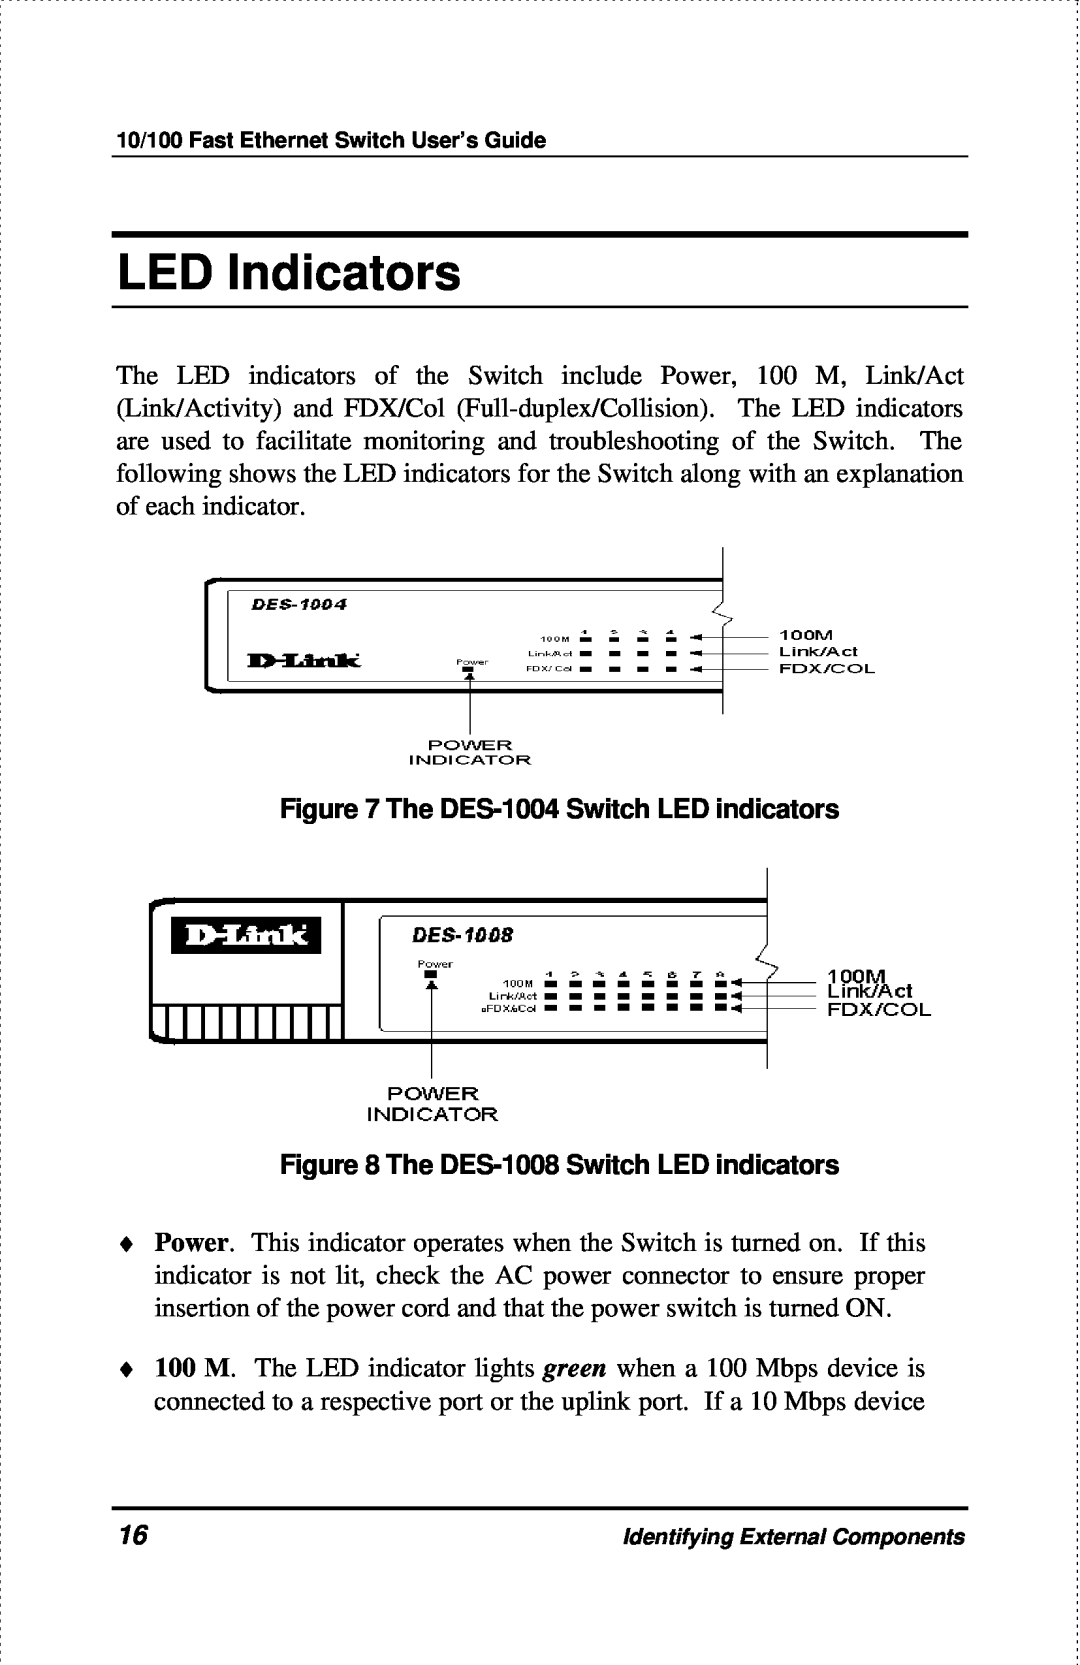 D-Link manual LED Indicators, The DES-1004 Switch LED indicators, The DES-1008 Switch LED indicators 